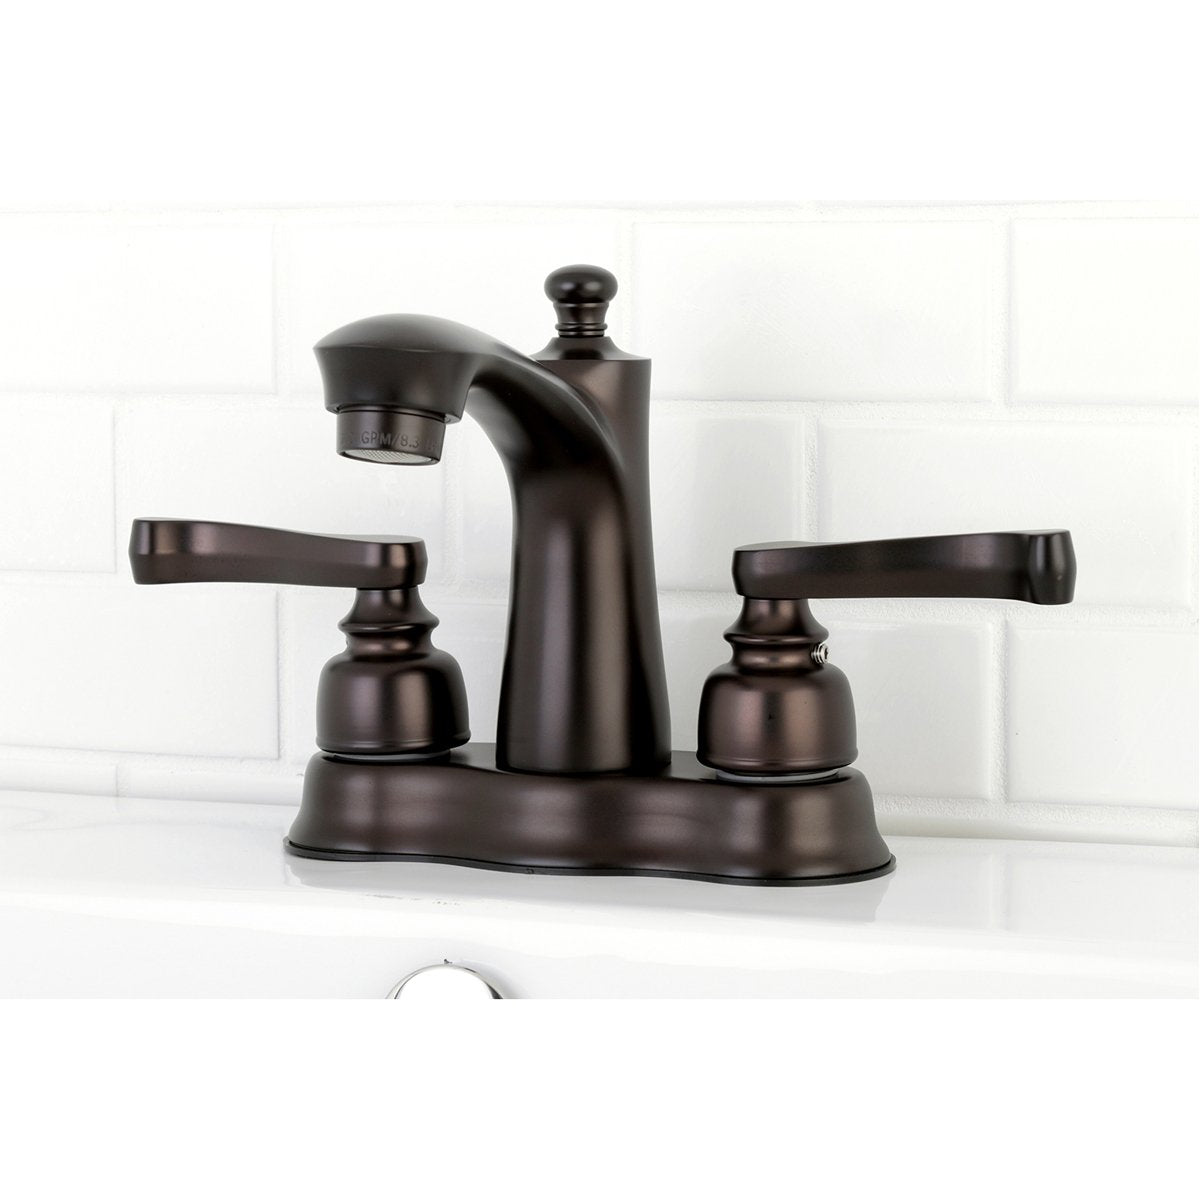 Kingston Brass Royale 4-Inch Centerset Bathroom Faucet